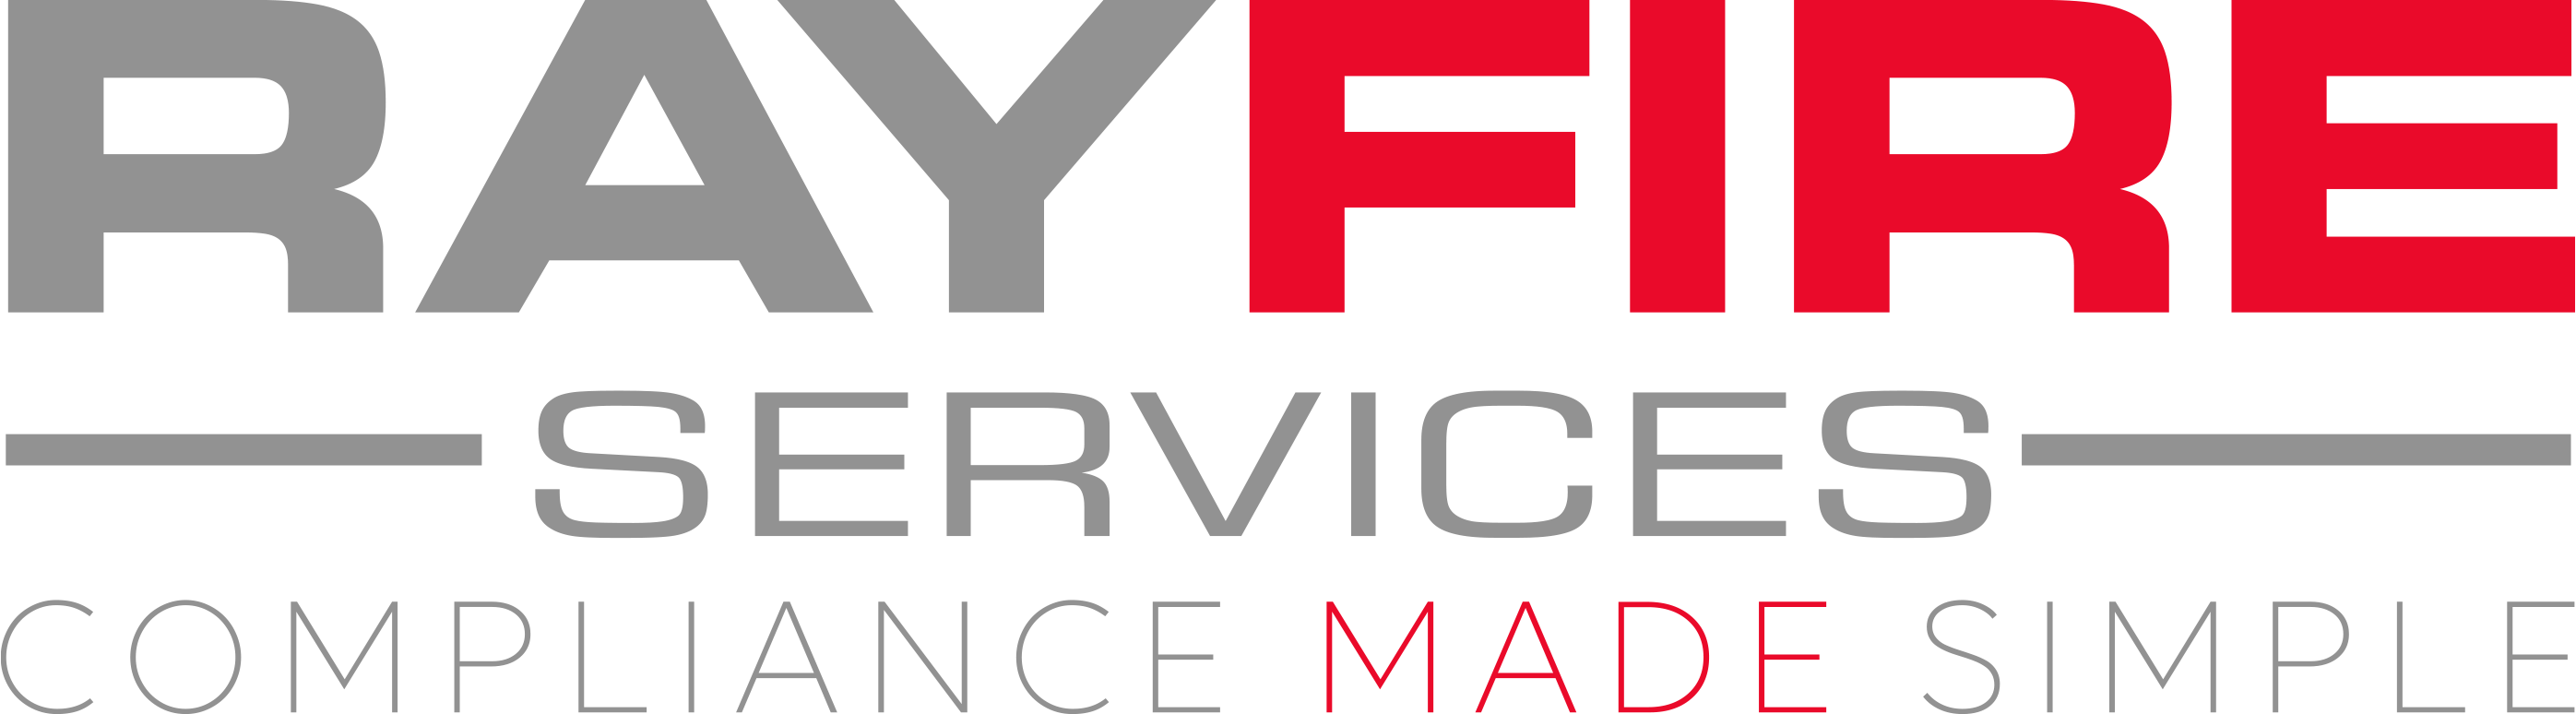 logo for RayFire Services Ltd